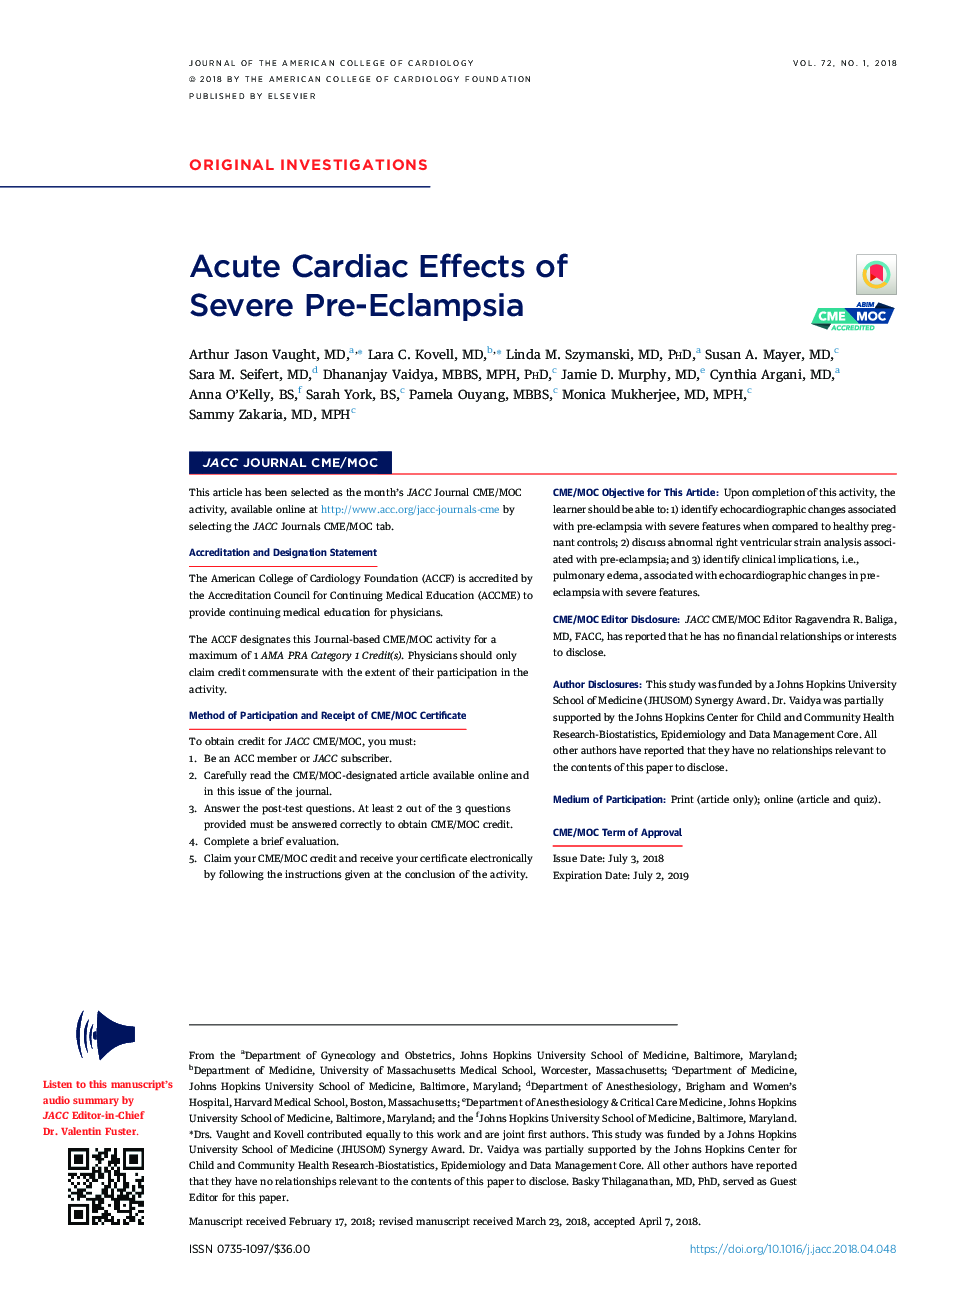 Acute Cardiac Effects of SevereÂ Pre-Eclampsia